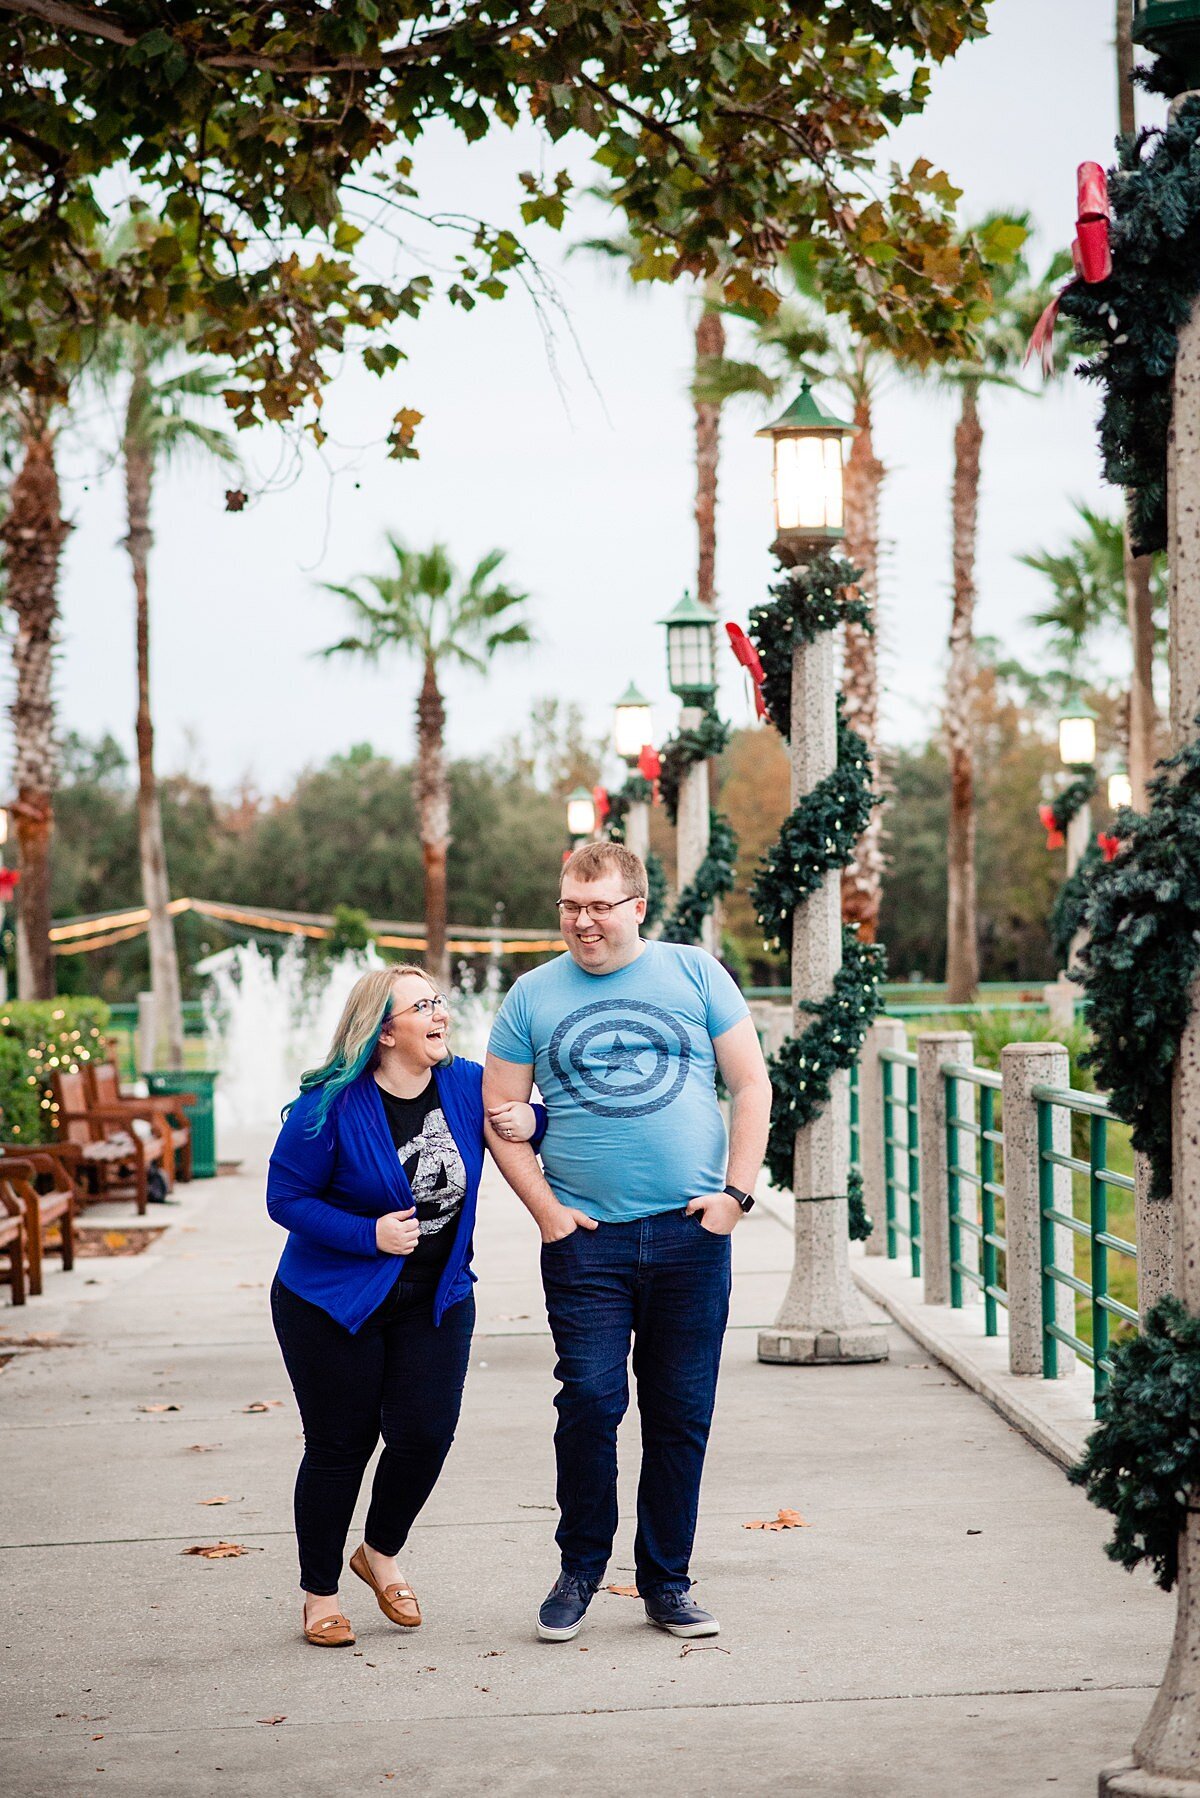 Pat and Mahlia walking in park near Disney World at Christmas wearing Marvel shirts